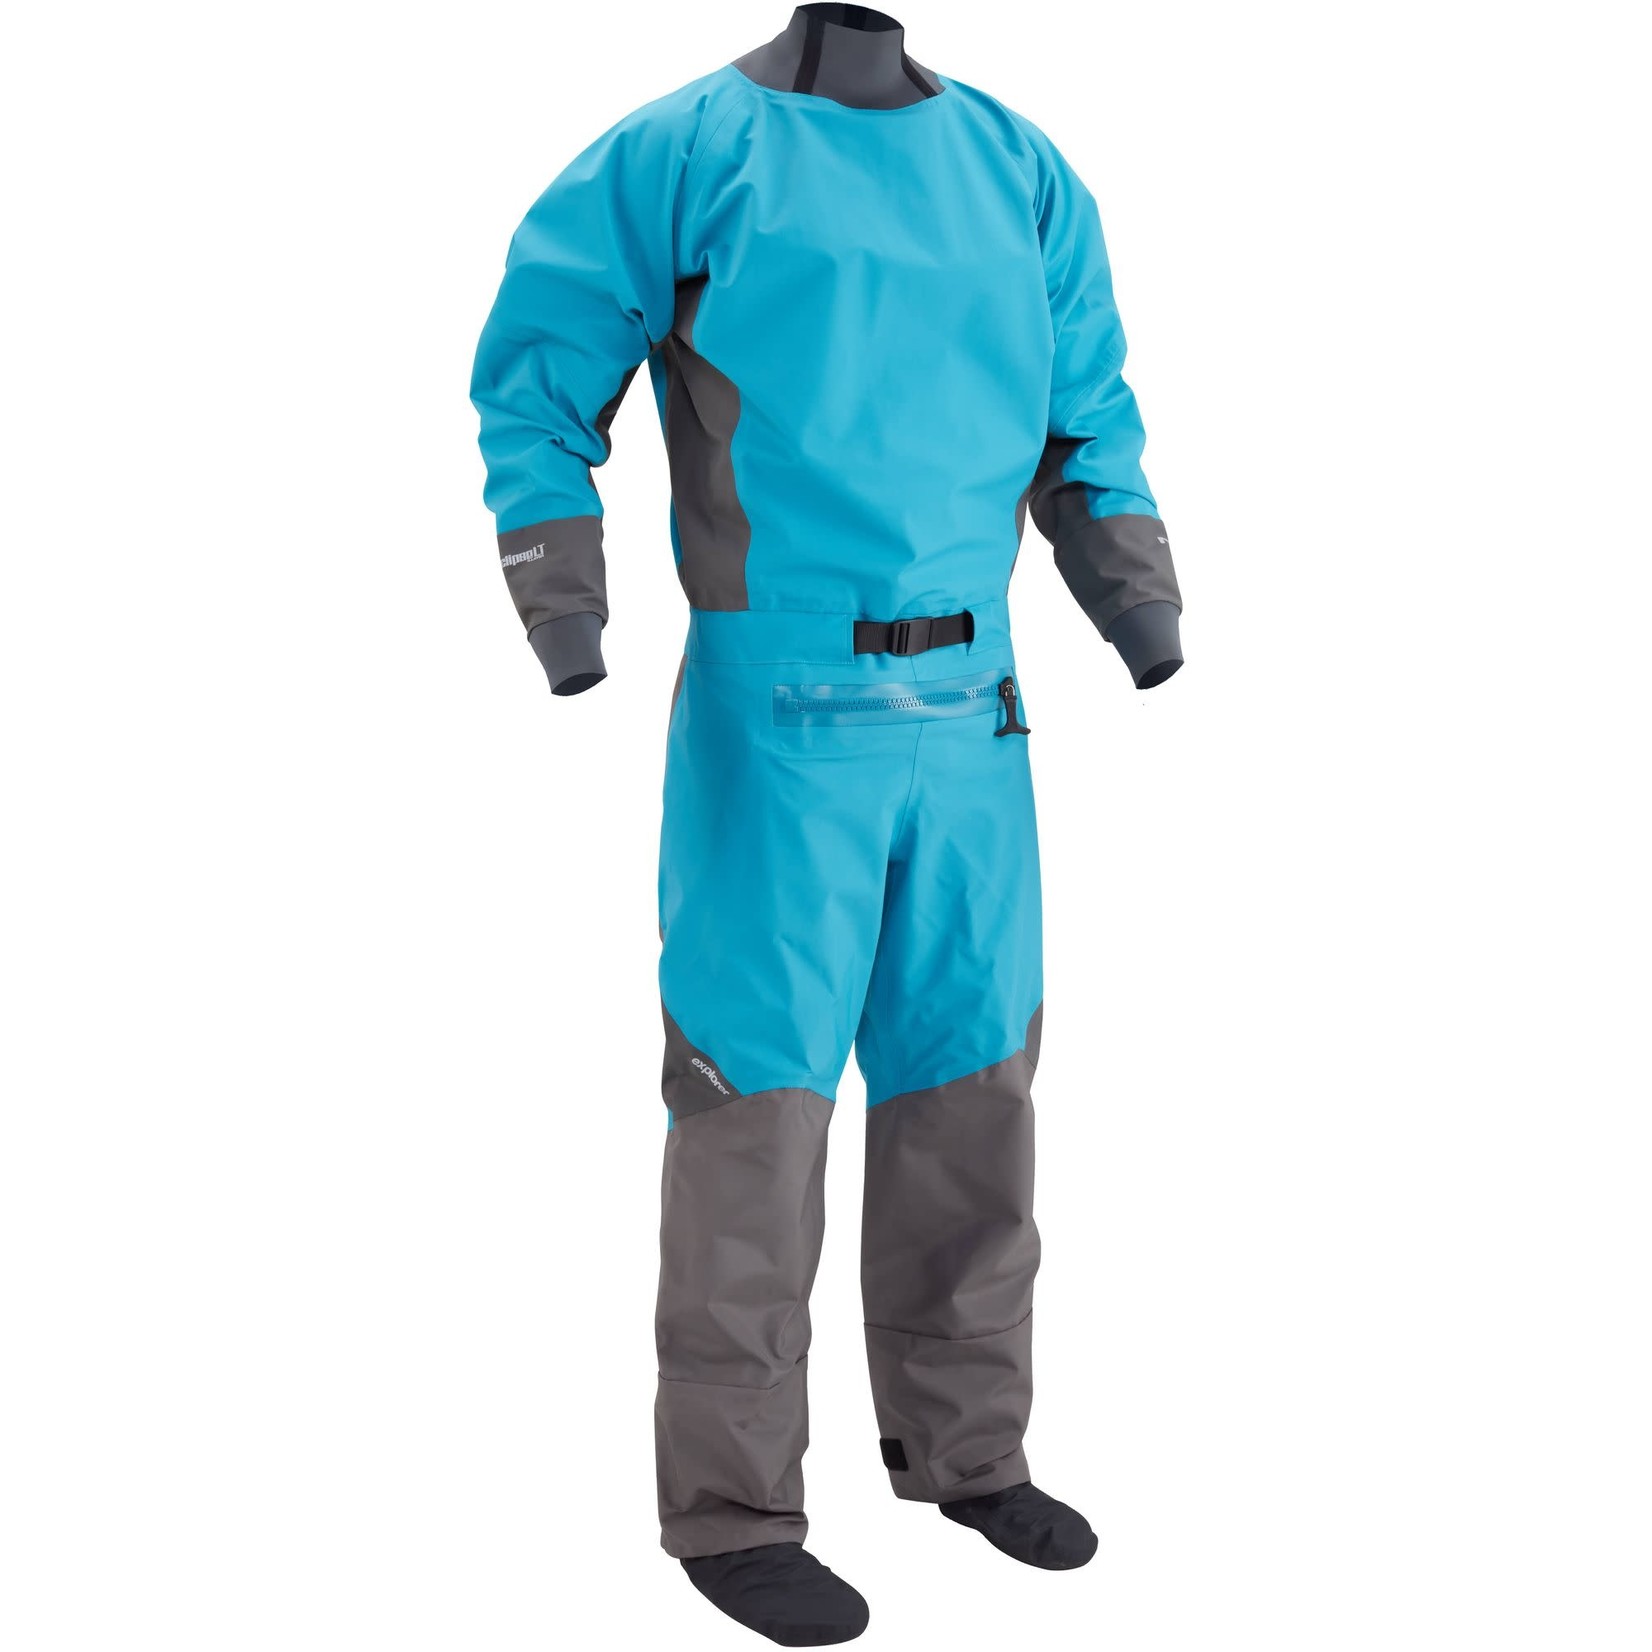 NRS Men's Explorer Paddling Suit